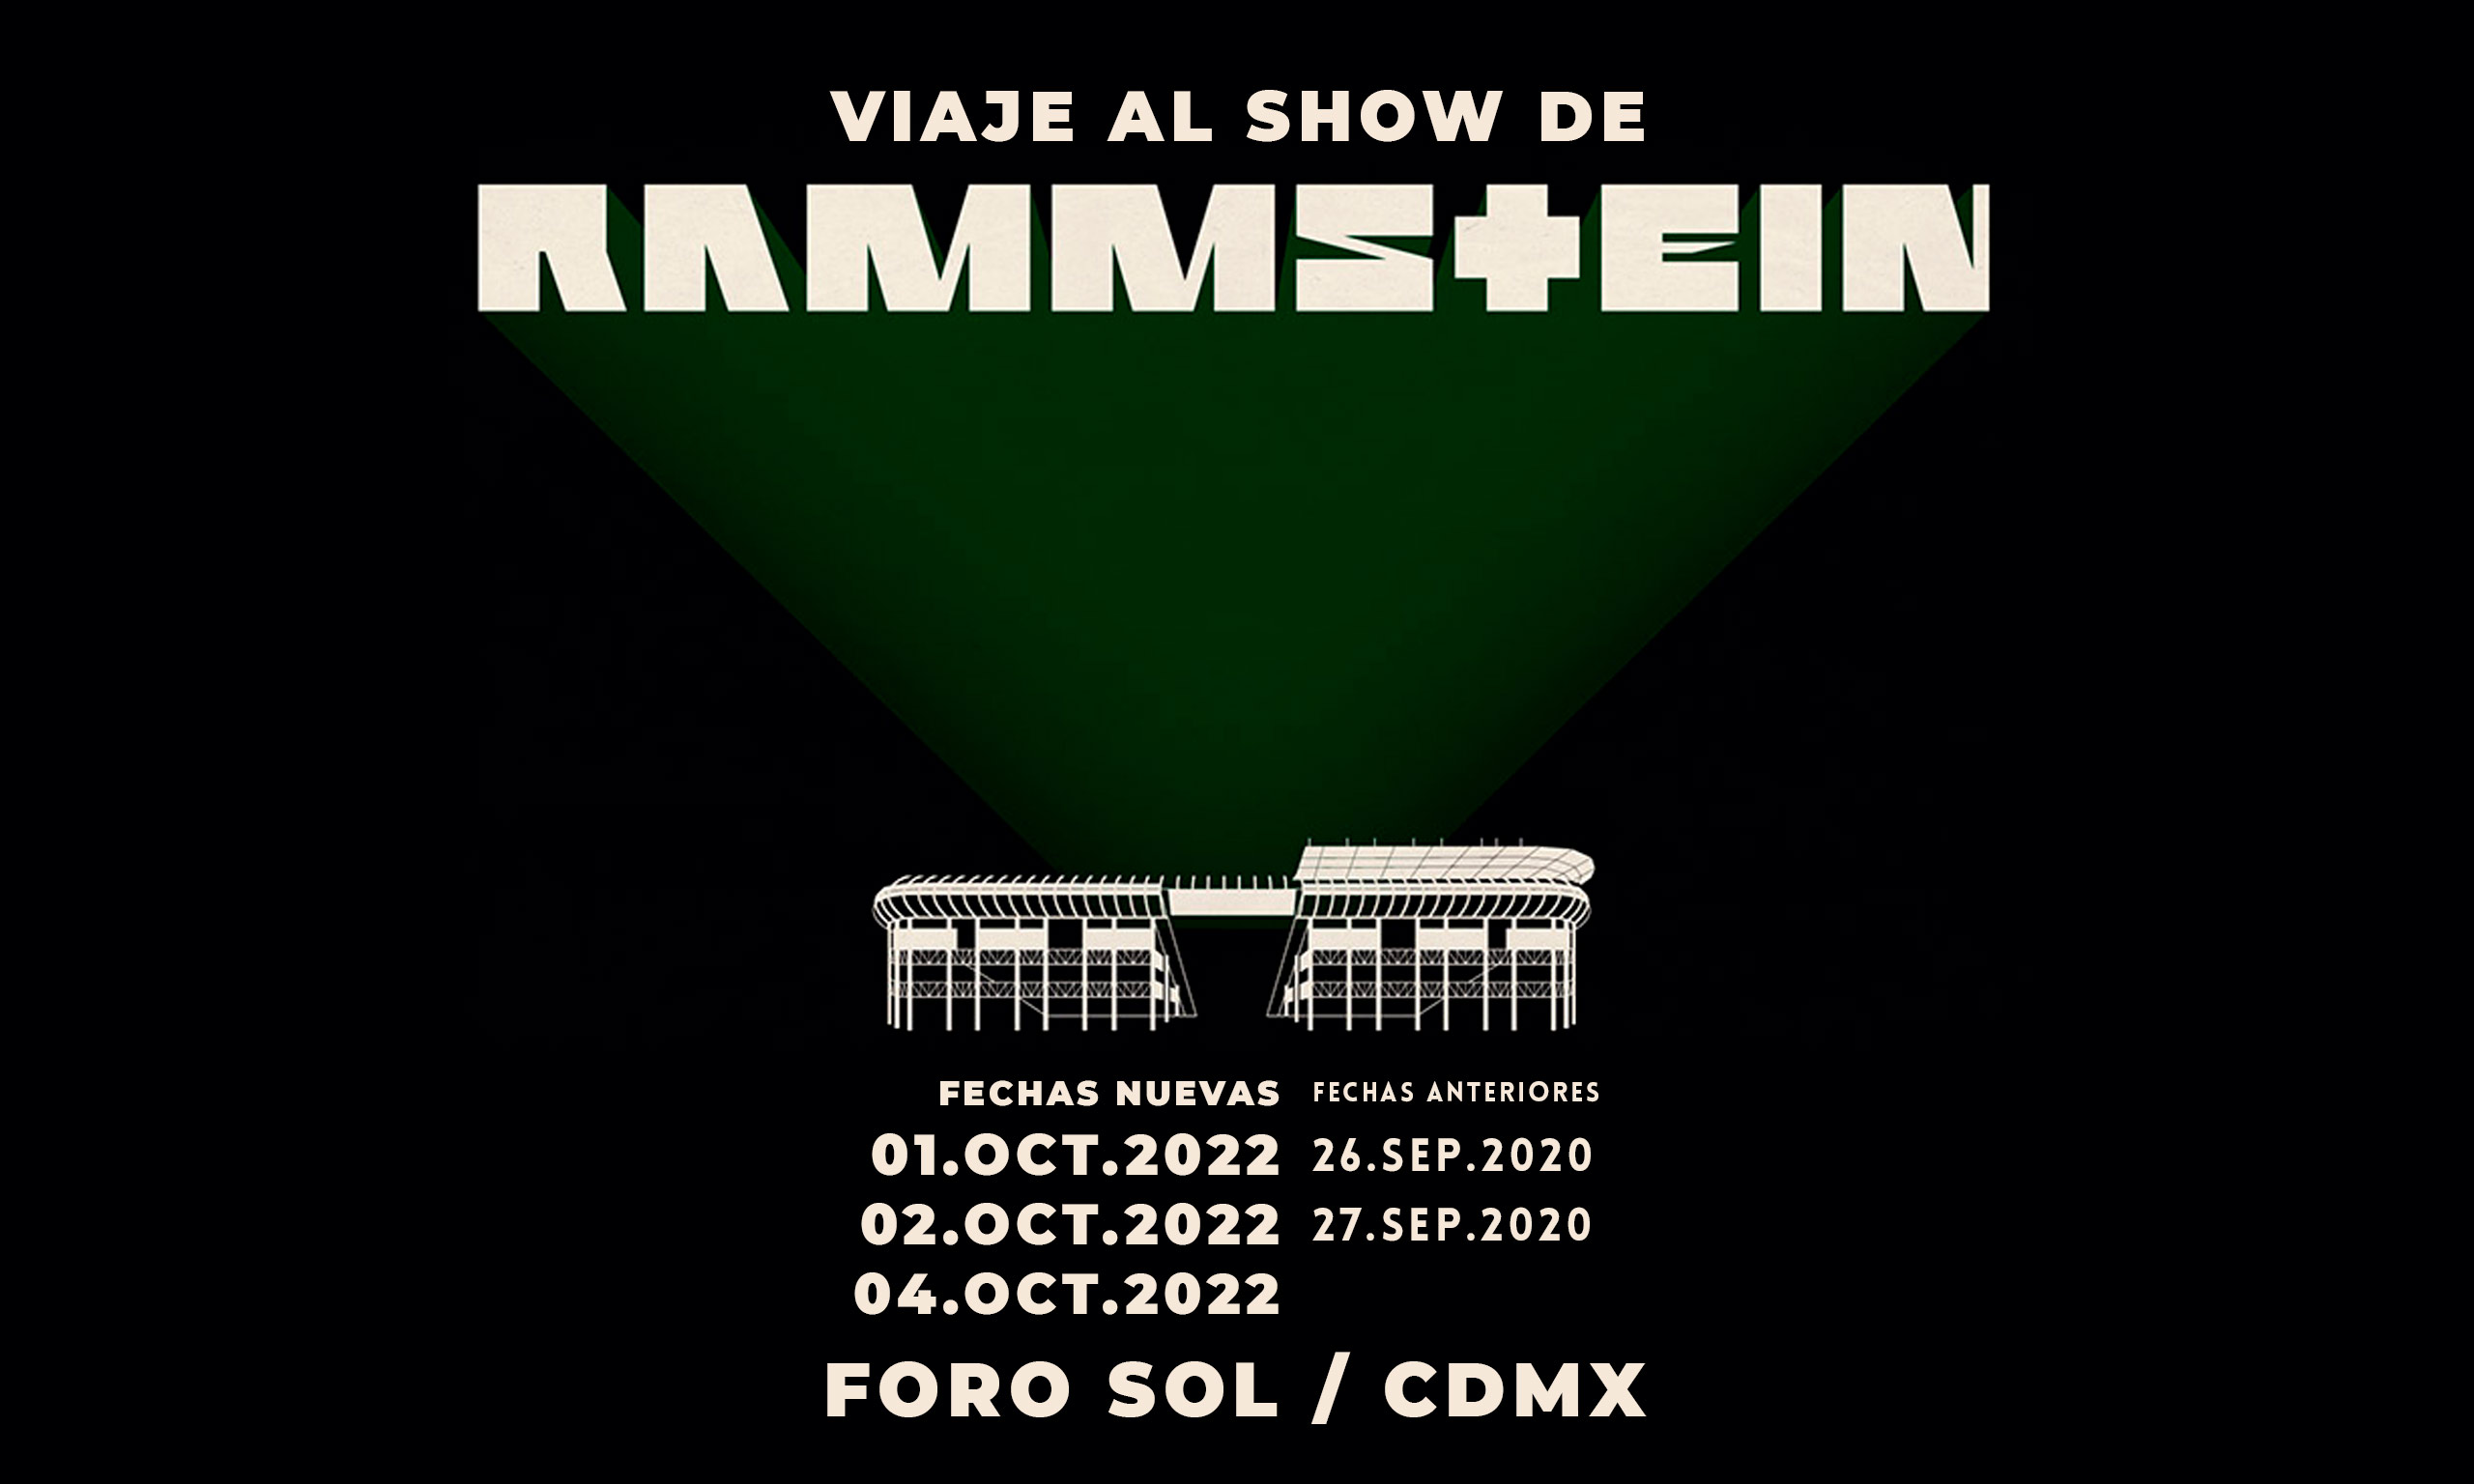 Rammstein-2022